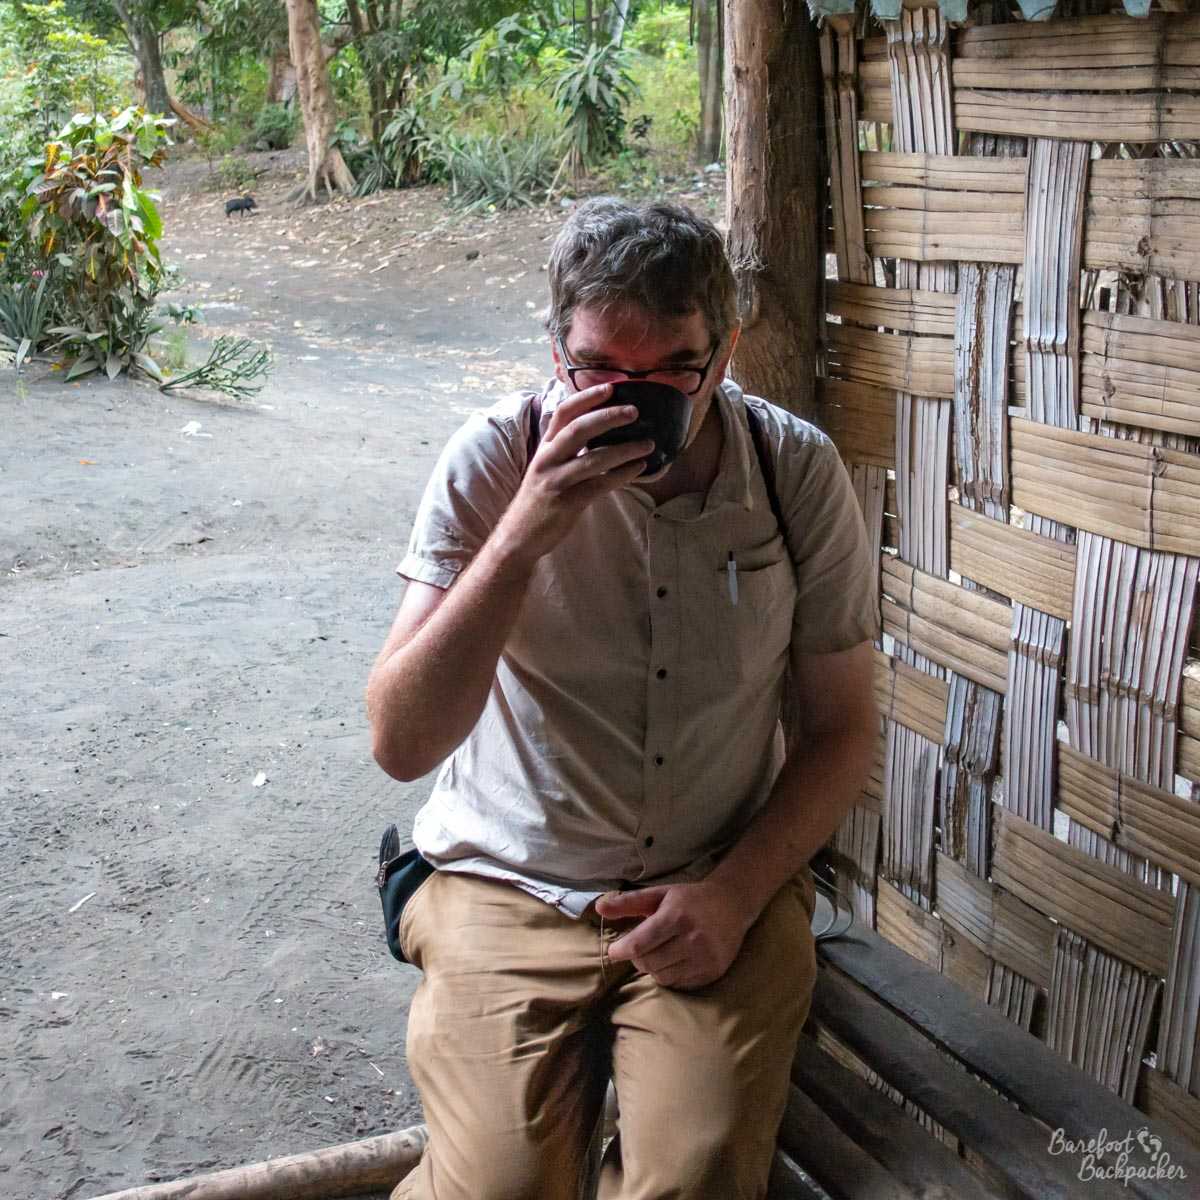 The Barefoot Backpacker drinking kava.